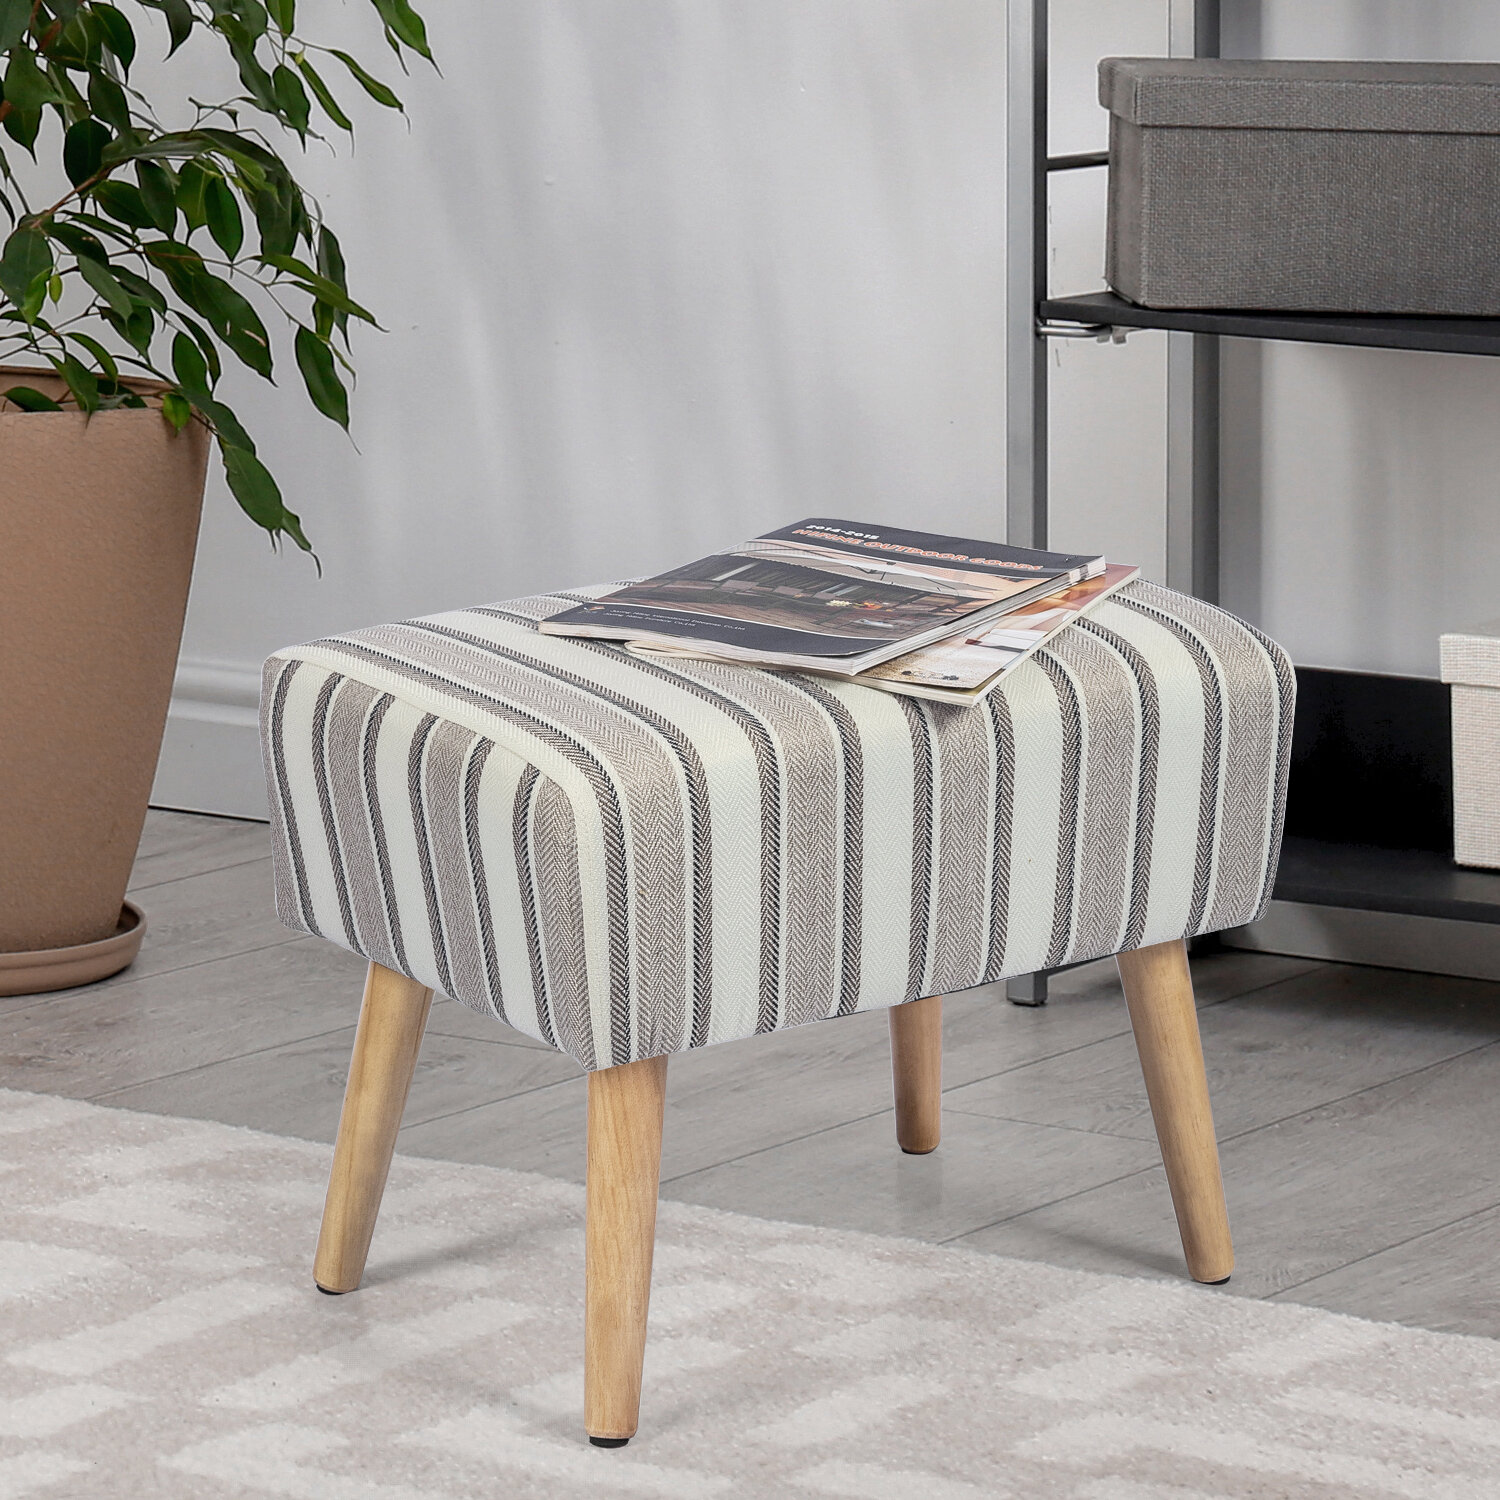 barahona simple nordic striped seat vanity stool